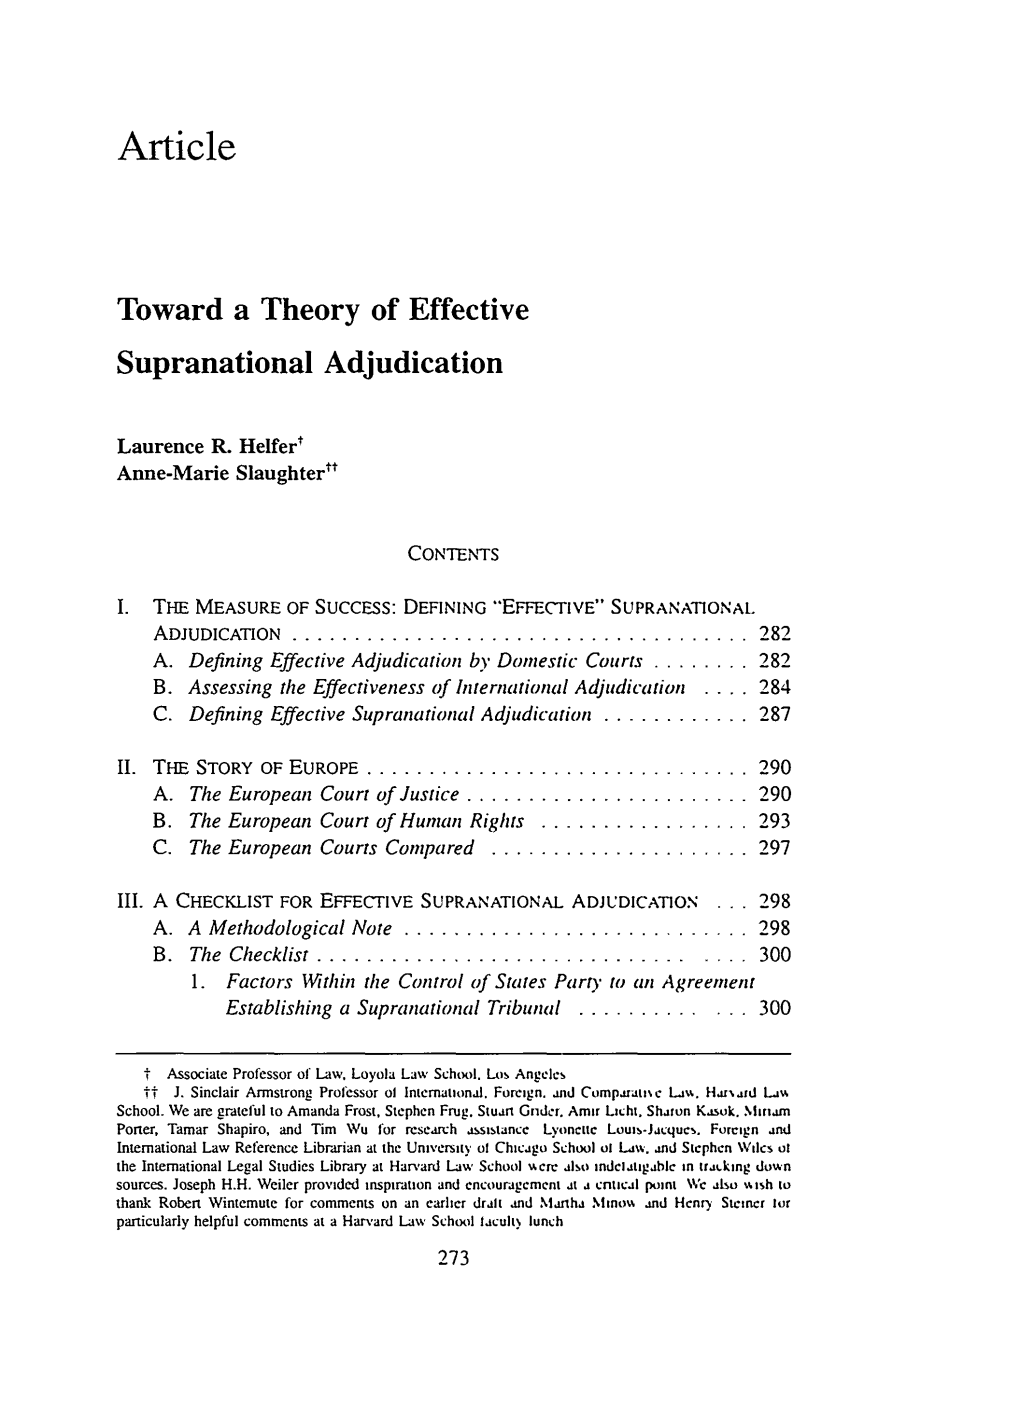 Toward a Theory of Effective Supranational Adjudication